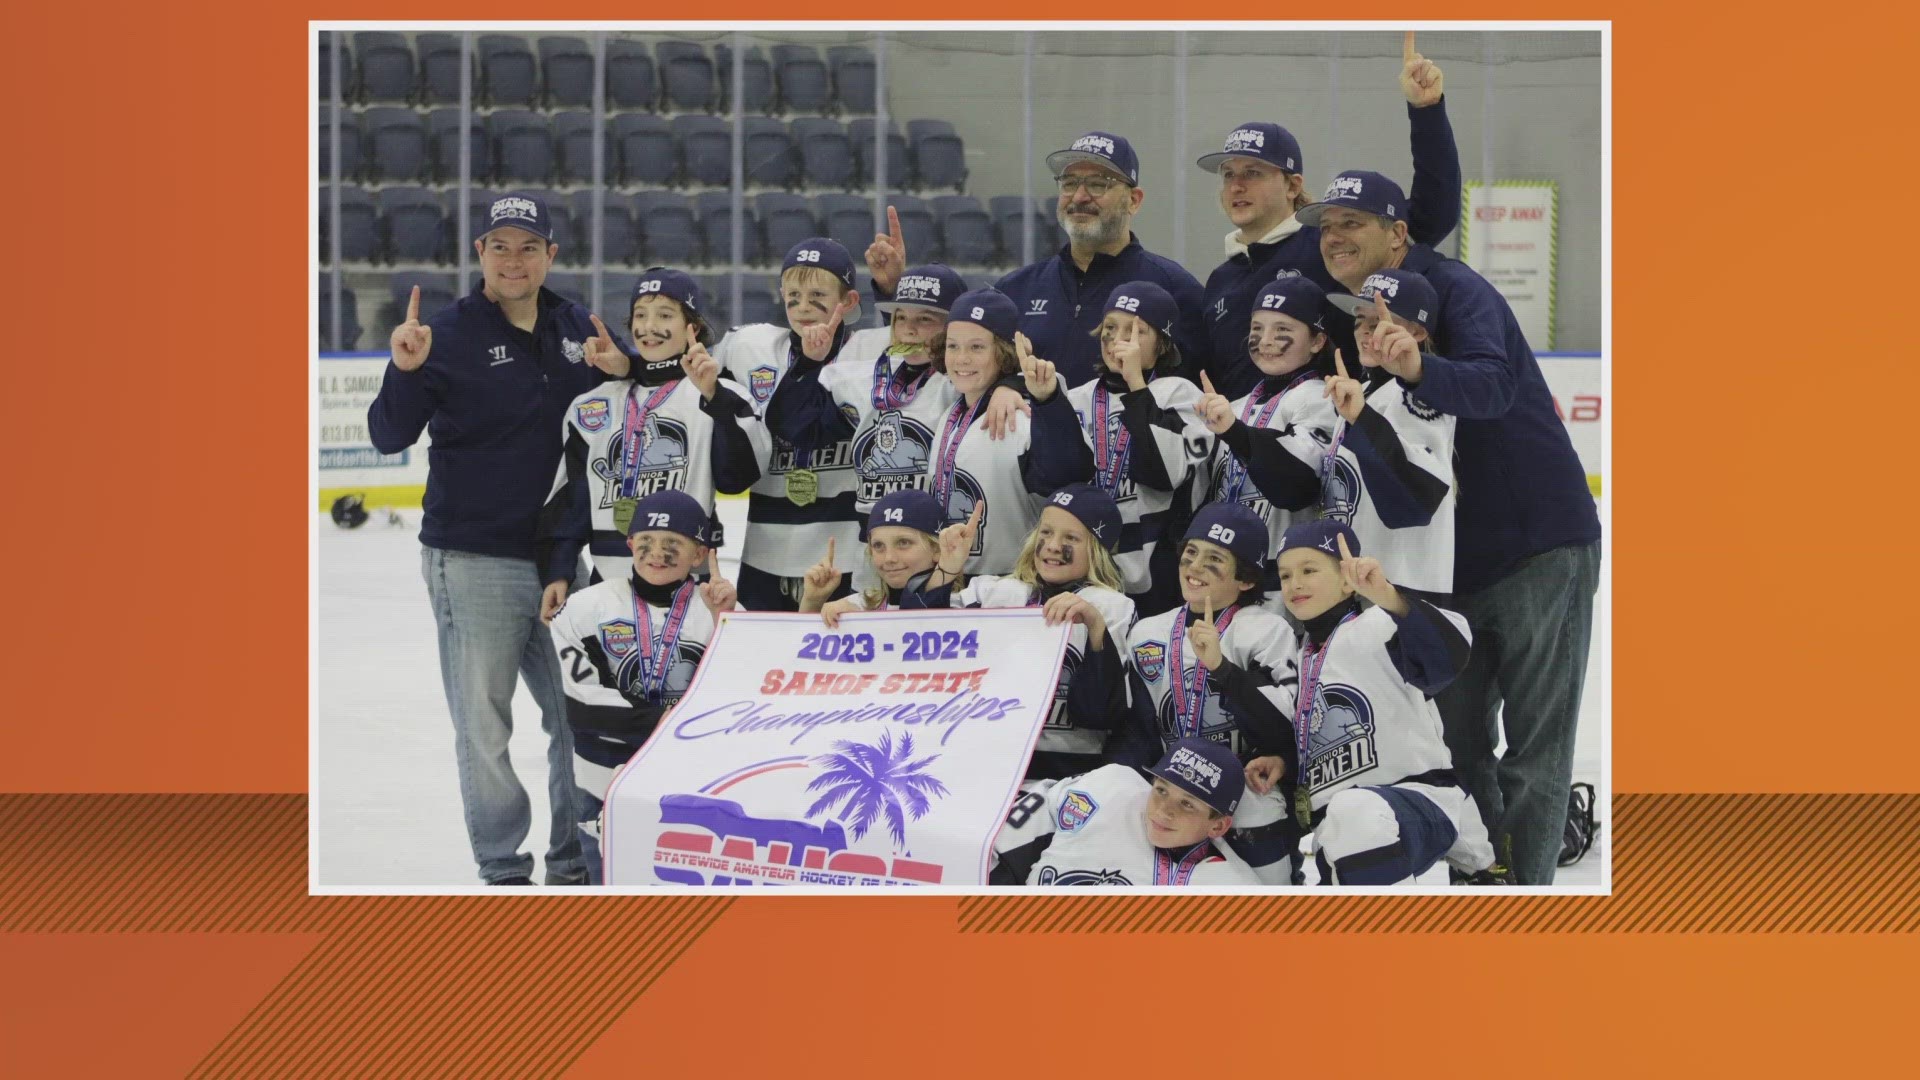 The Junior Icemen 10u hockey team became 2023-2024 Sahof State Champions!